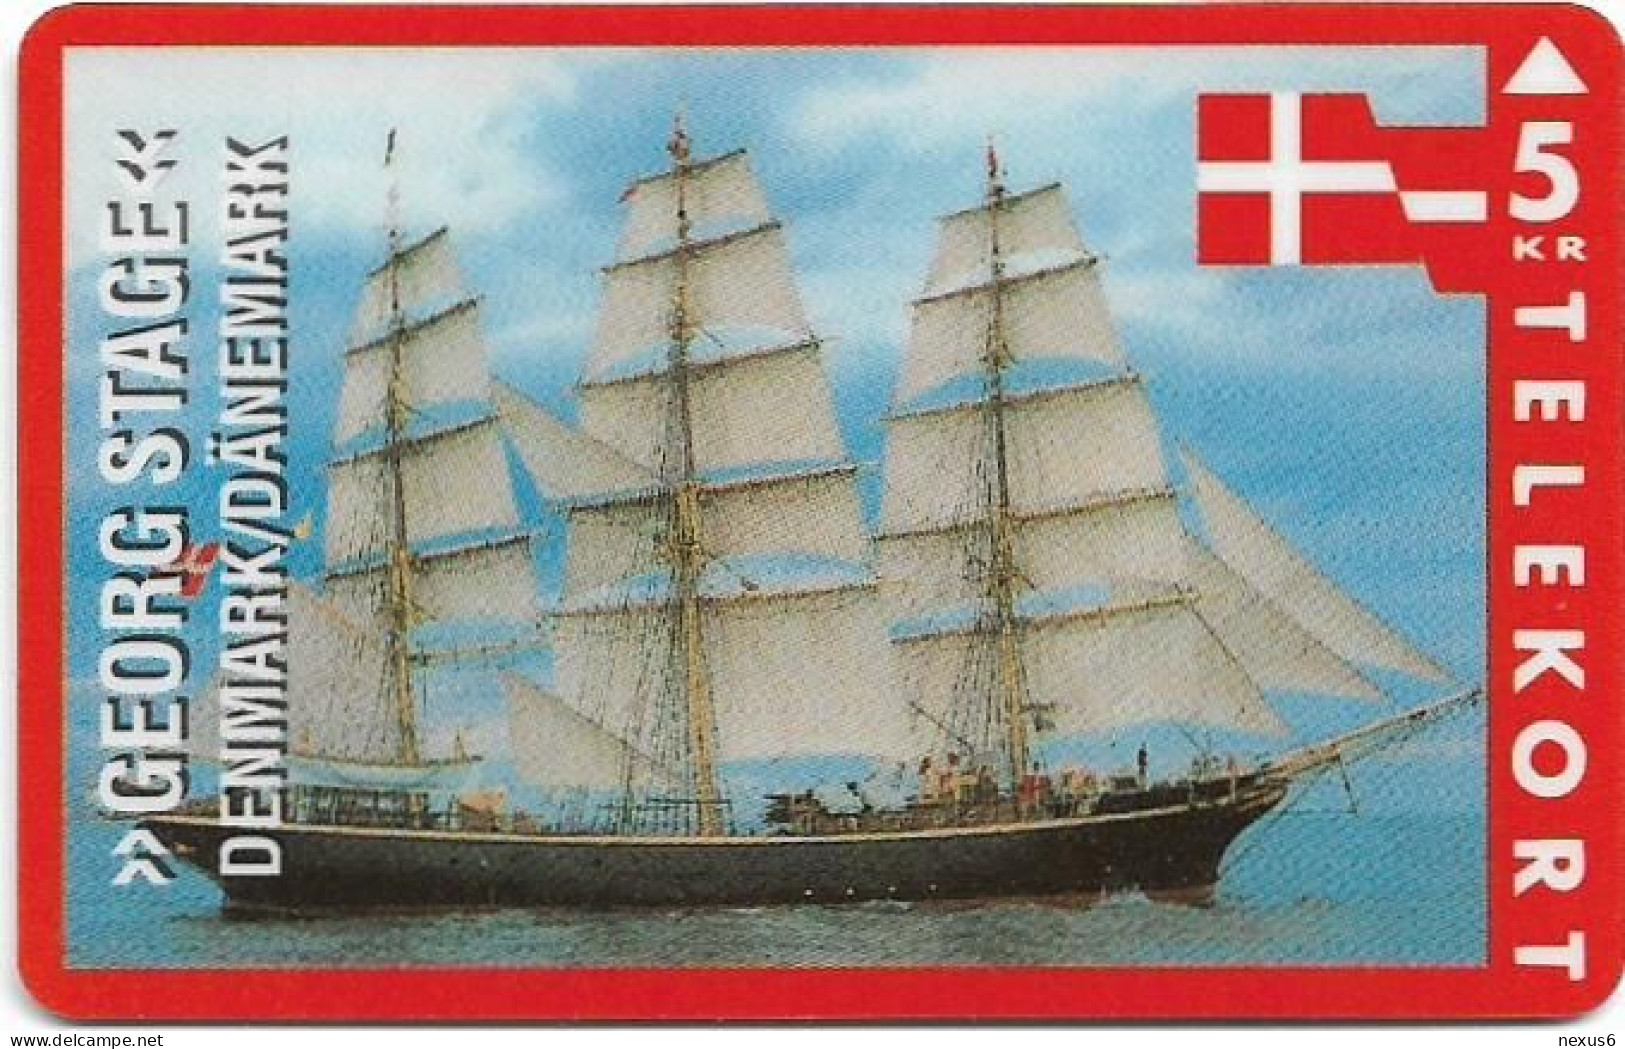 Denmark - KTAS - Ships (Red) - Denmark - Georg Stage - TDKP060 - 01.1994, 5kr, 2.500ex, Used - Danimarca